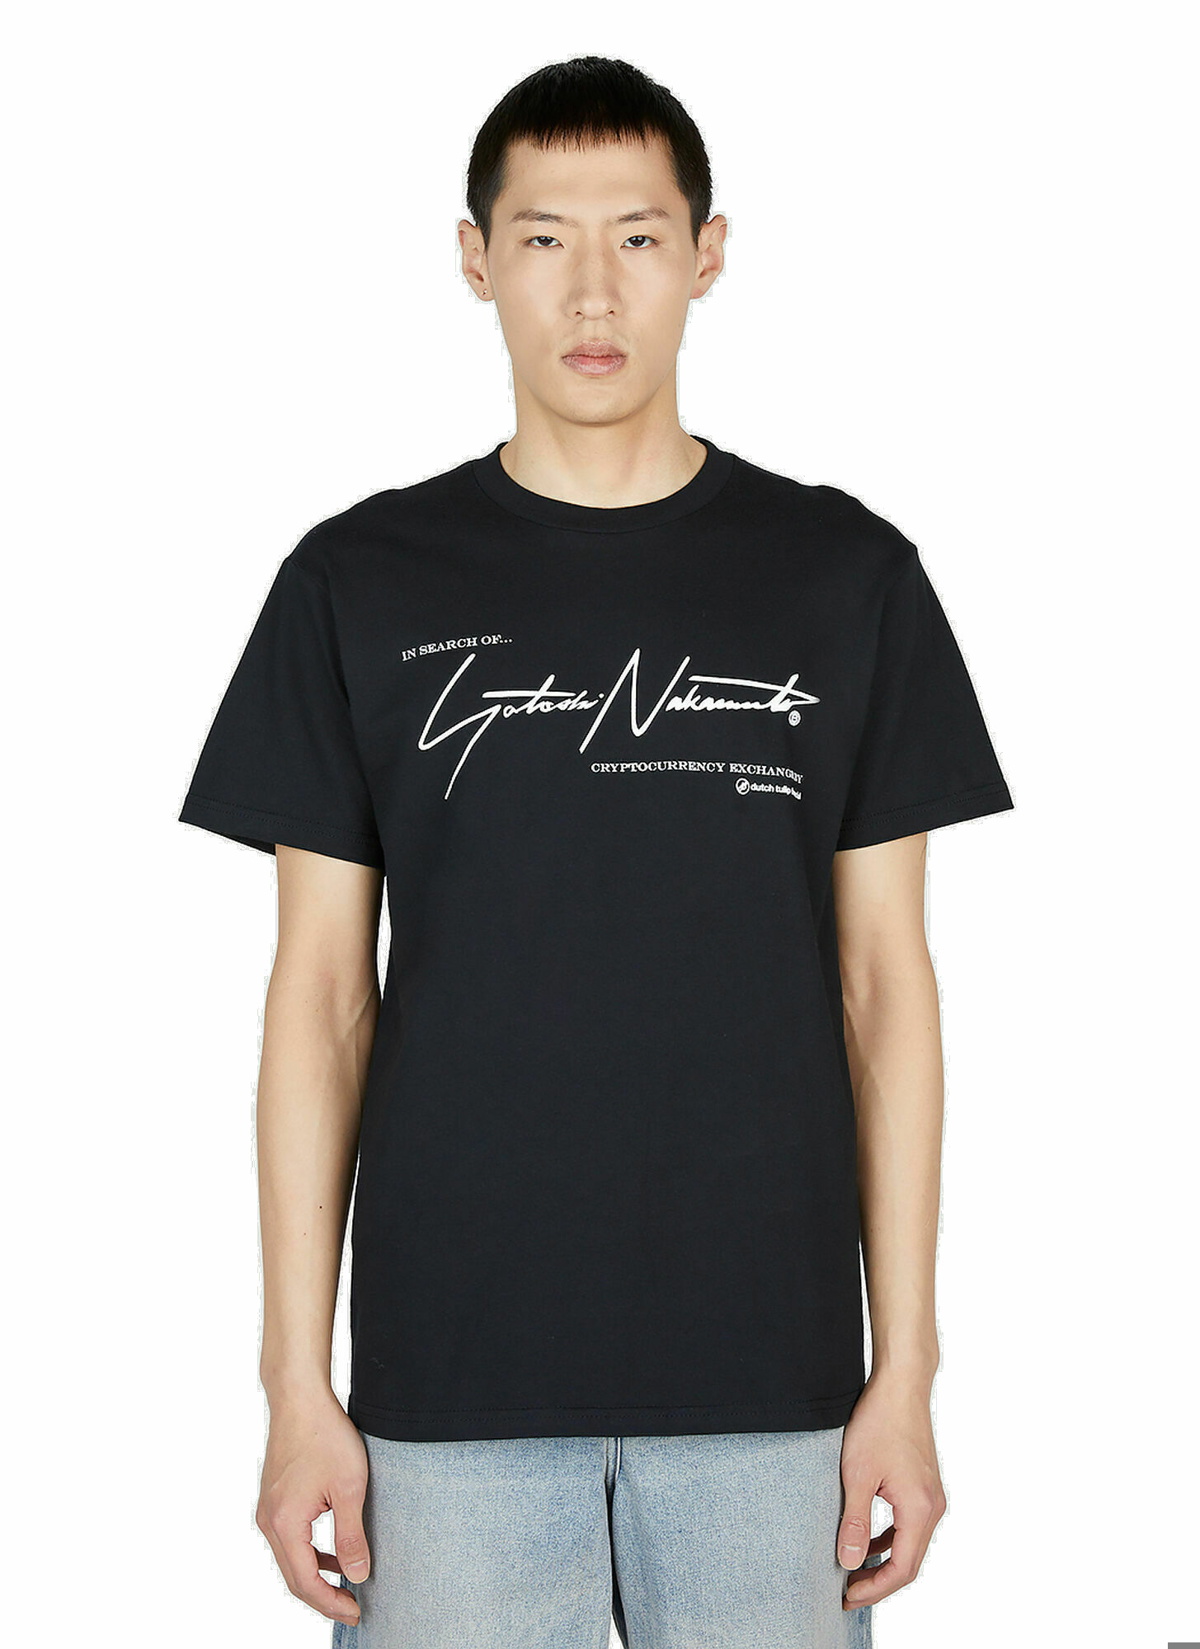 DTF.NYC - Satoshi Nakamoto T-Shirt in Black